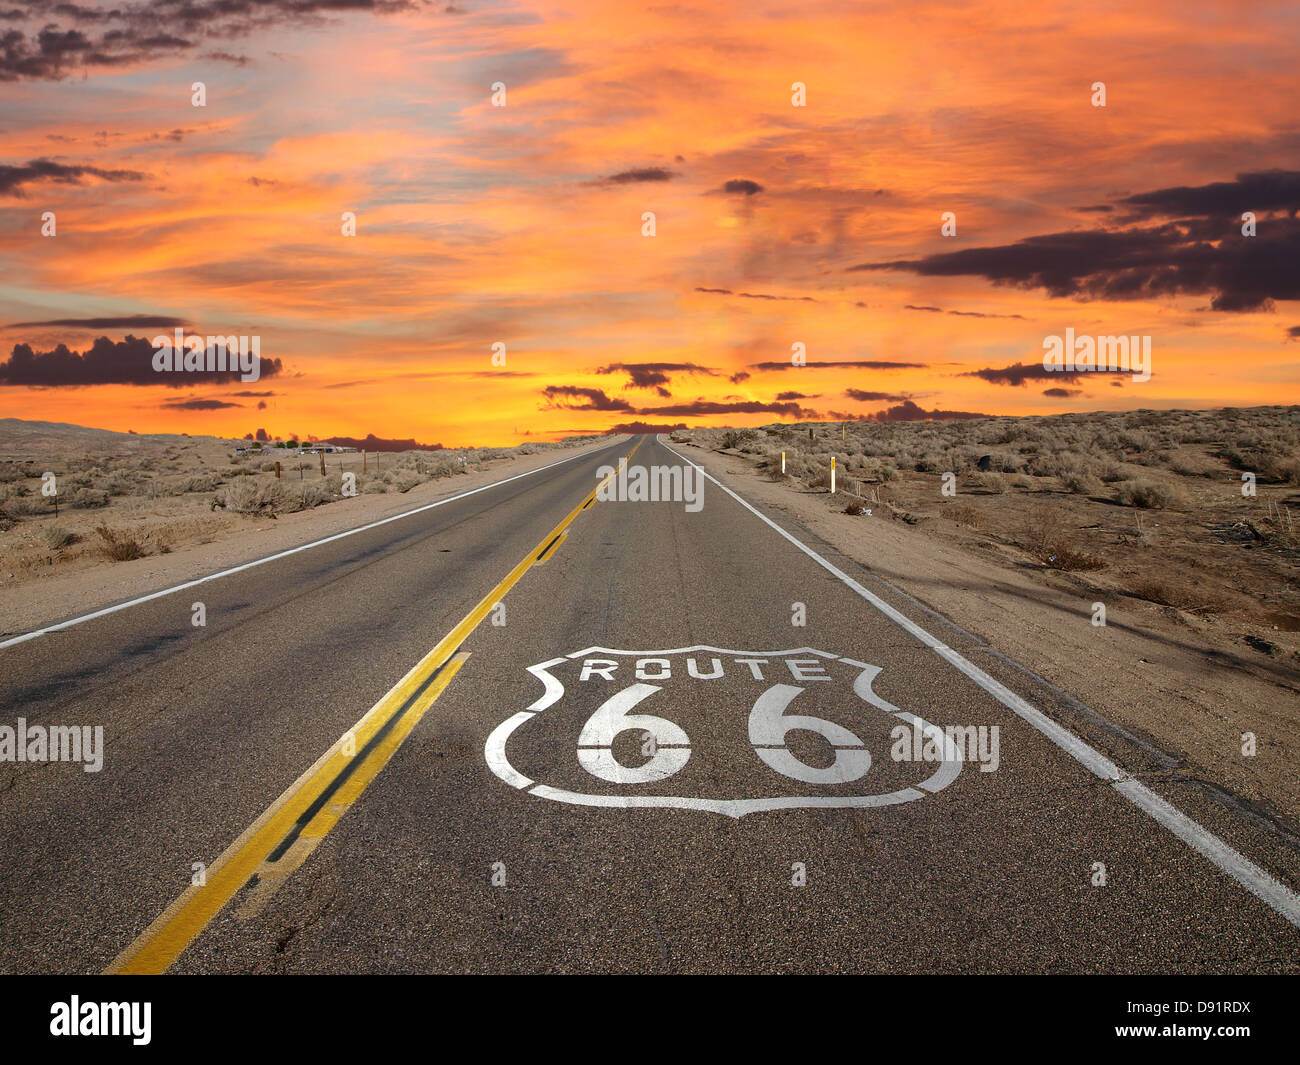 Route 66 pavement sign sunrise in California's Mojave desert. Stock Photo